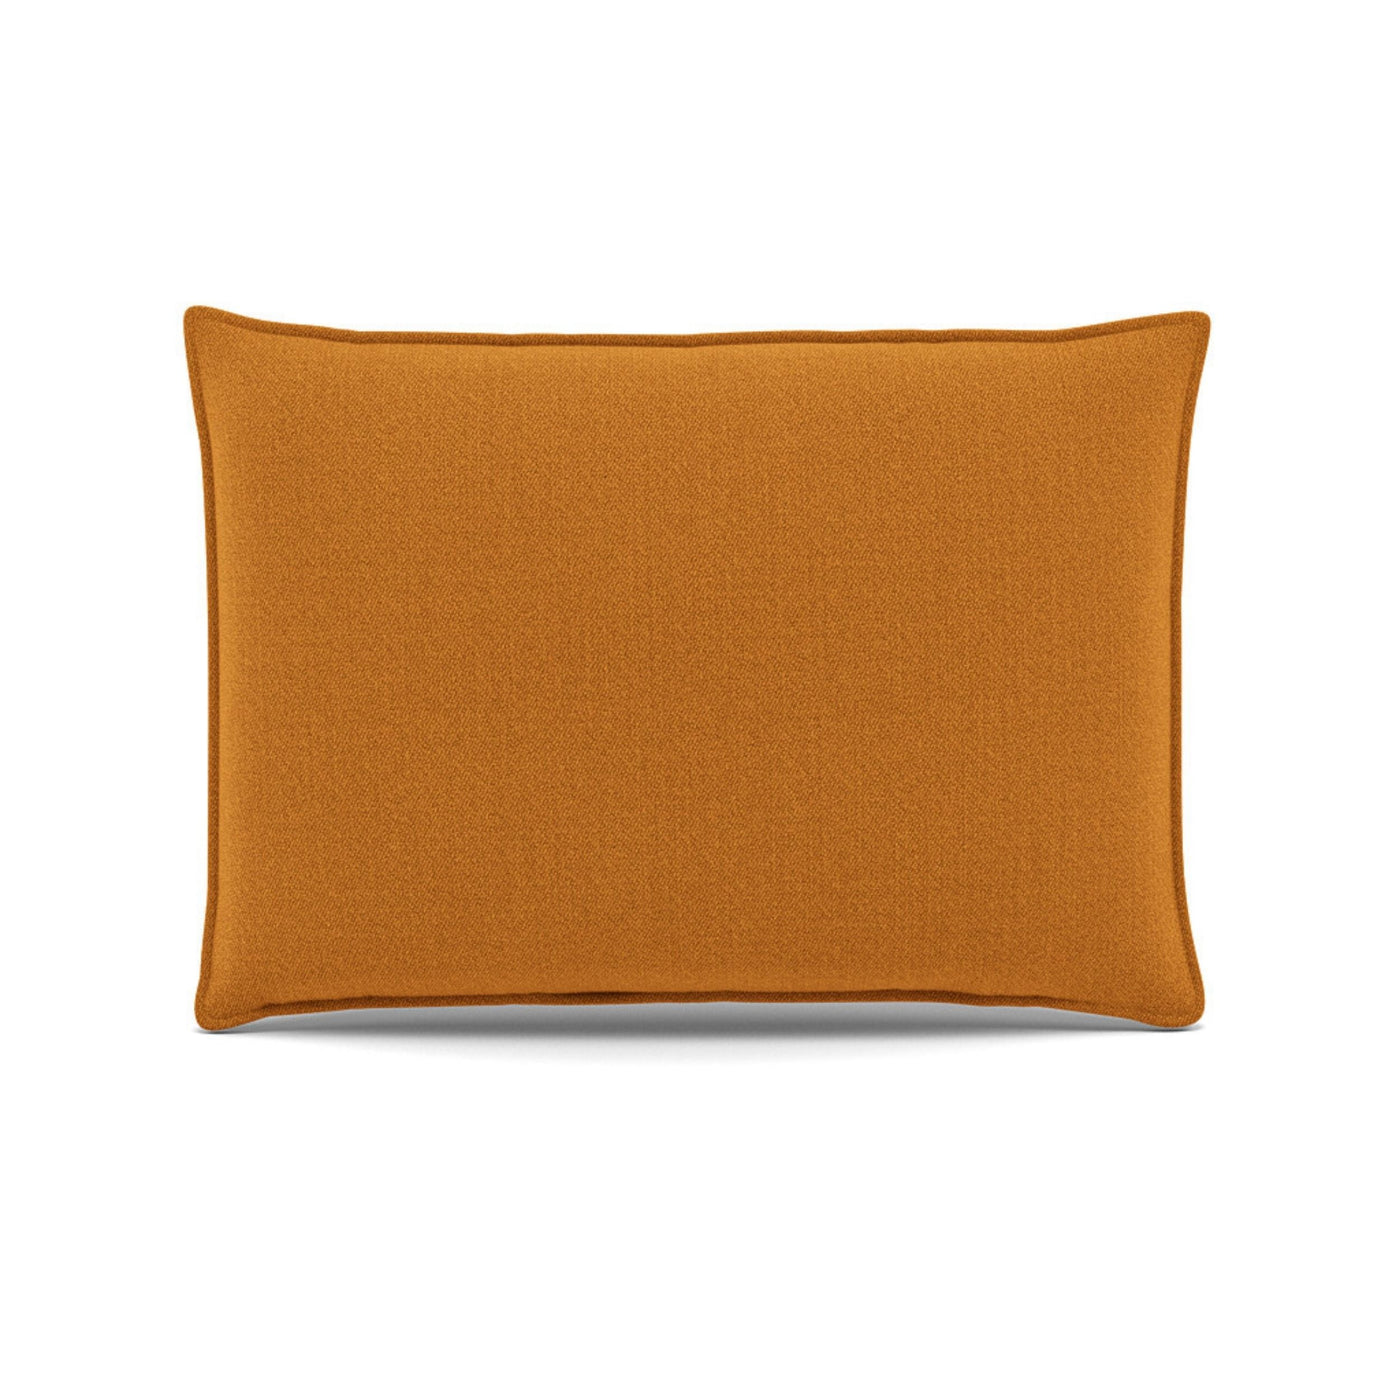 Muutos In Situ Cushion for the In Situ Modular Sofa series in vidar 472, 70x50cm. Made to order from someday designs. #colour_vidar-472